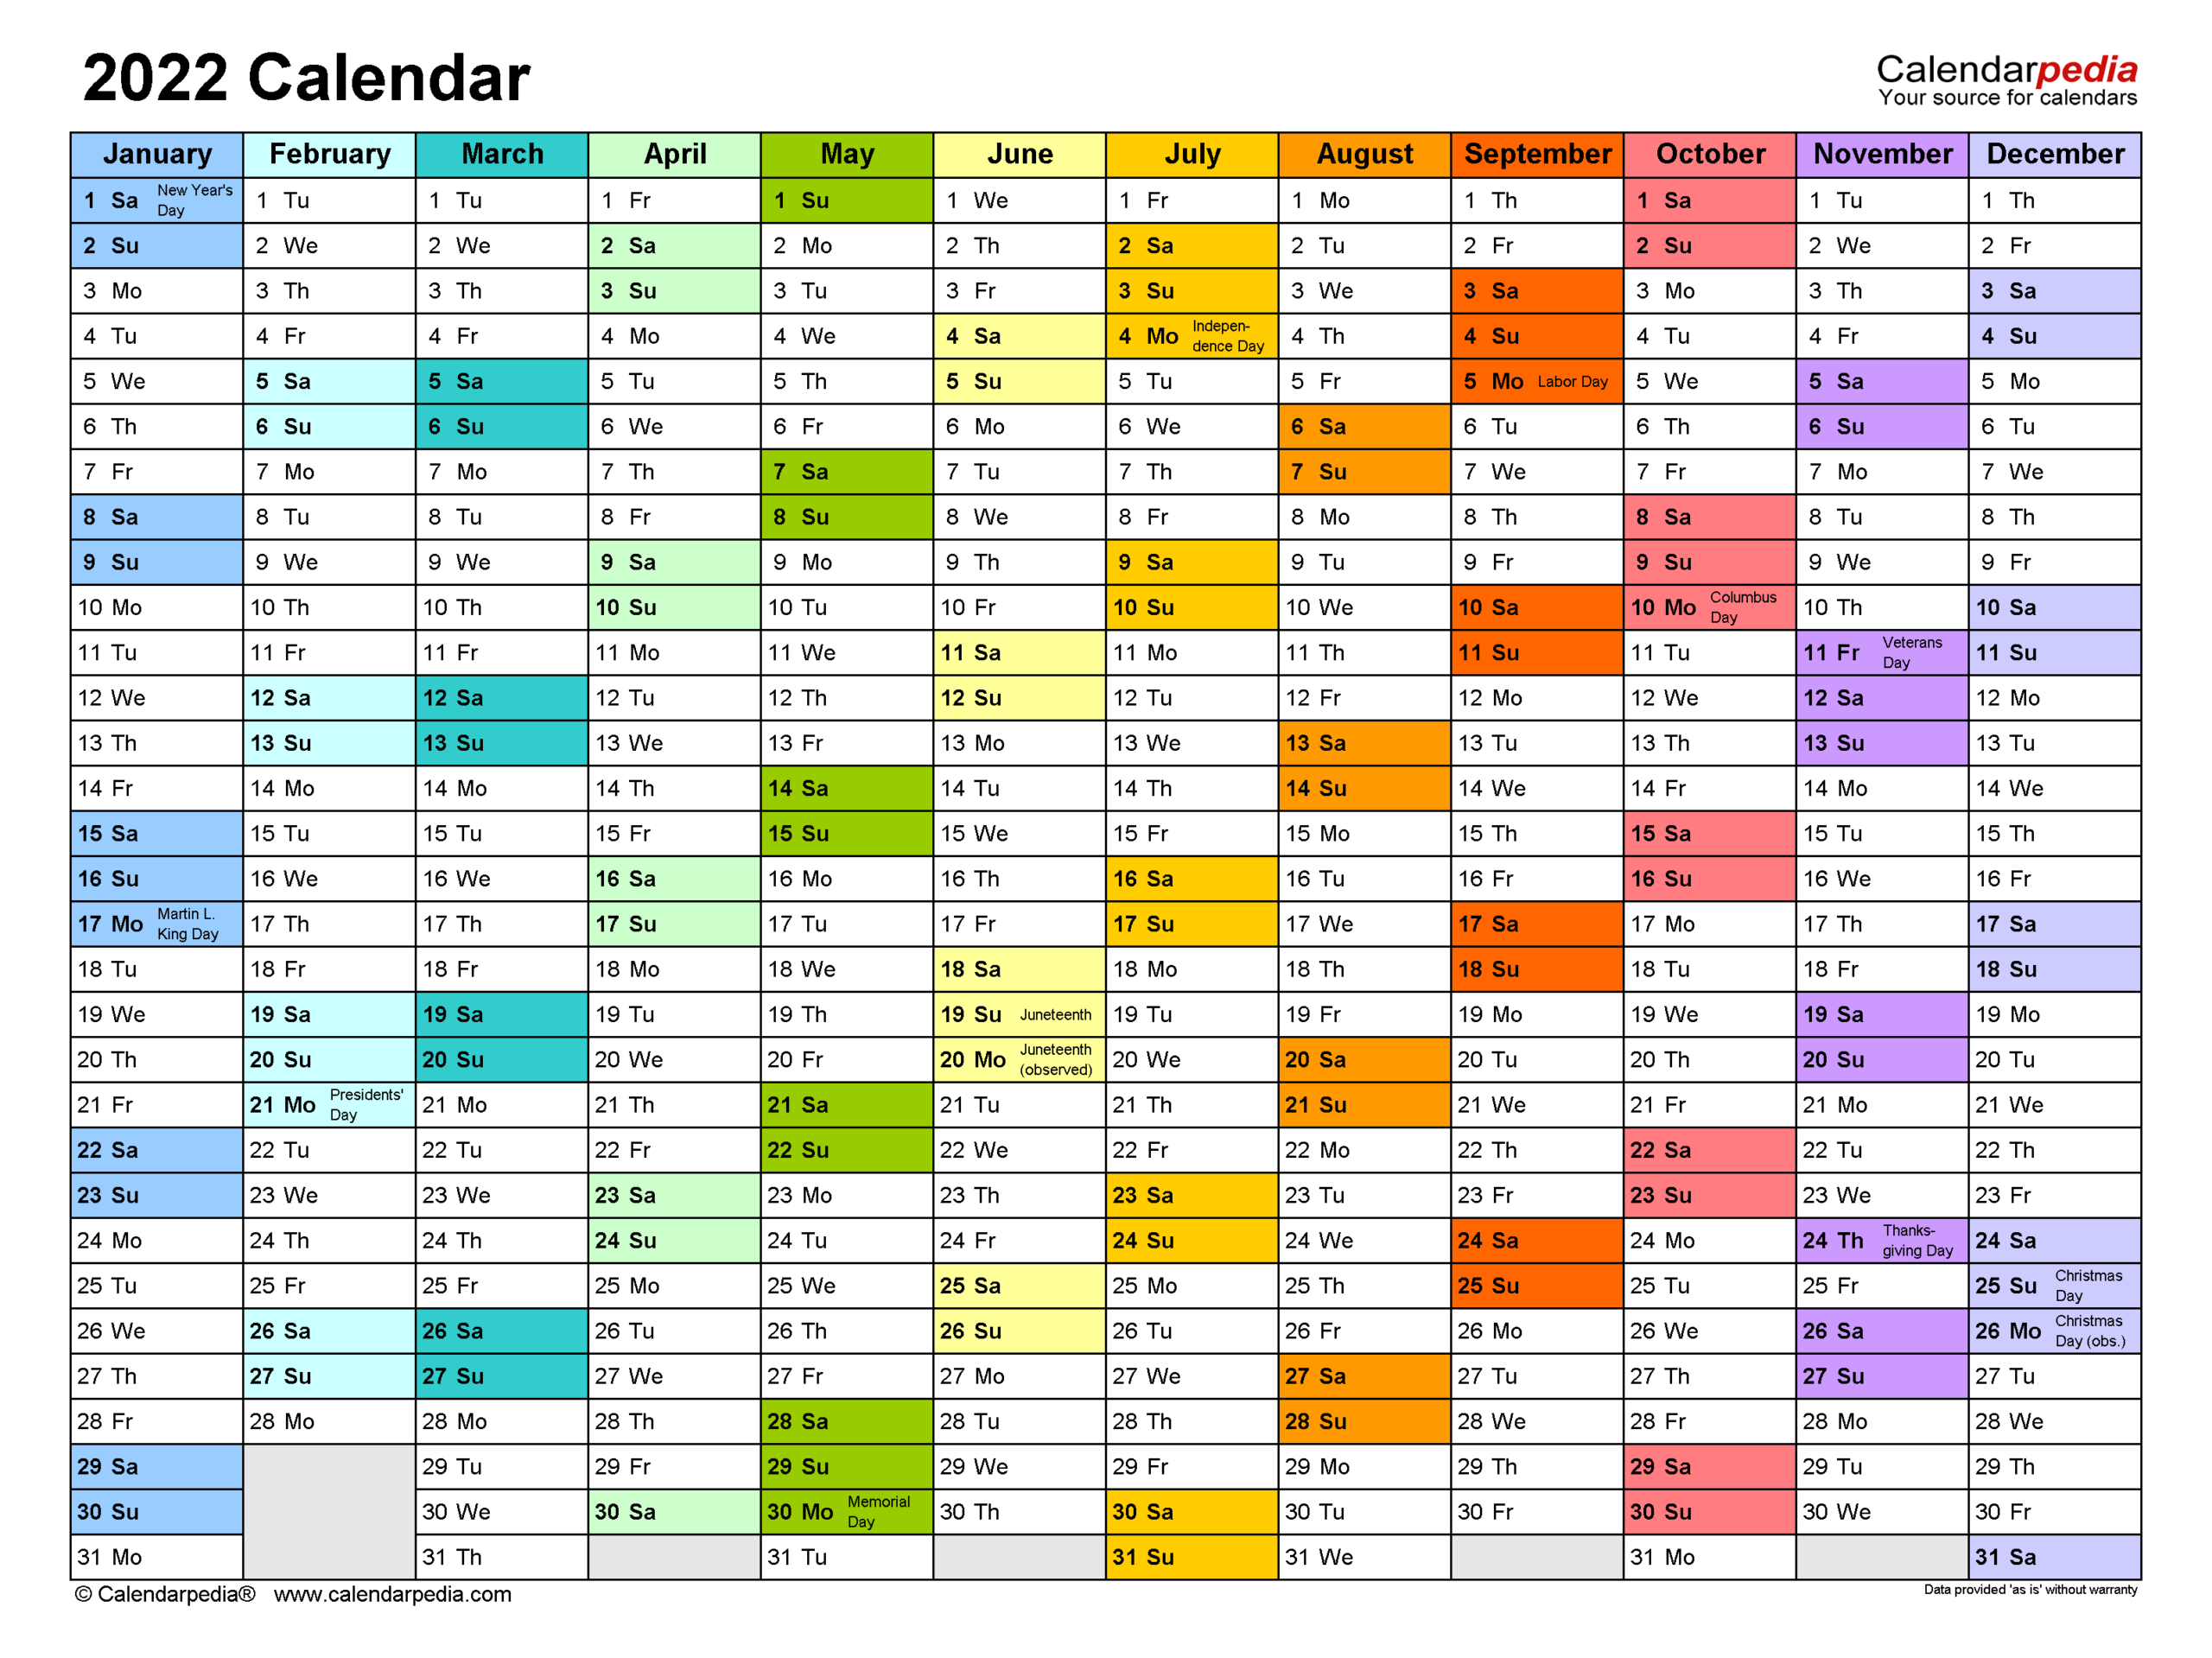 2022 Calendar - Free Printable Word Templates - Calendarpedia